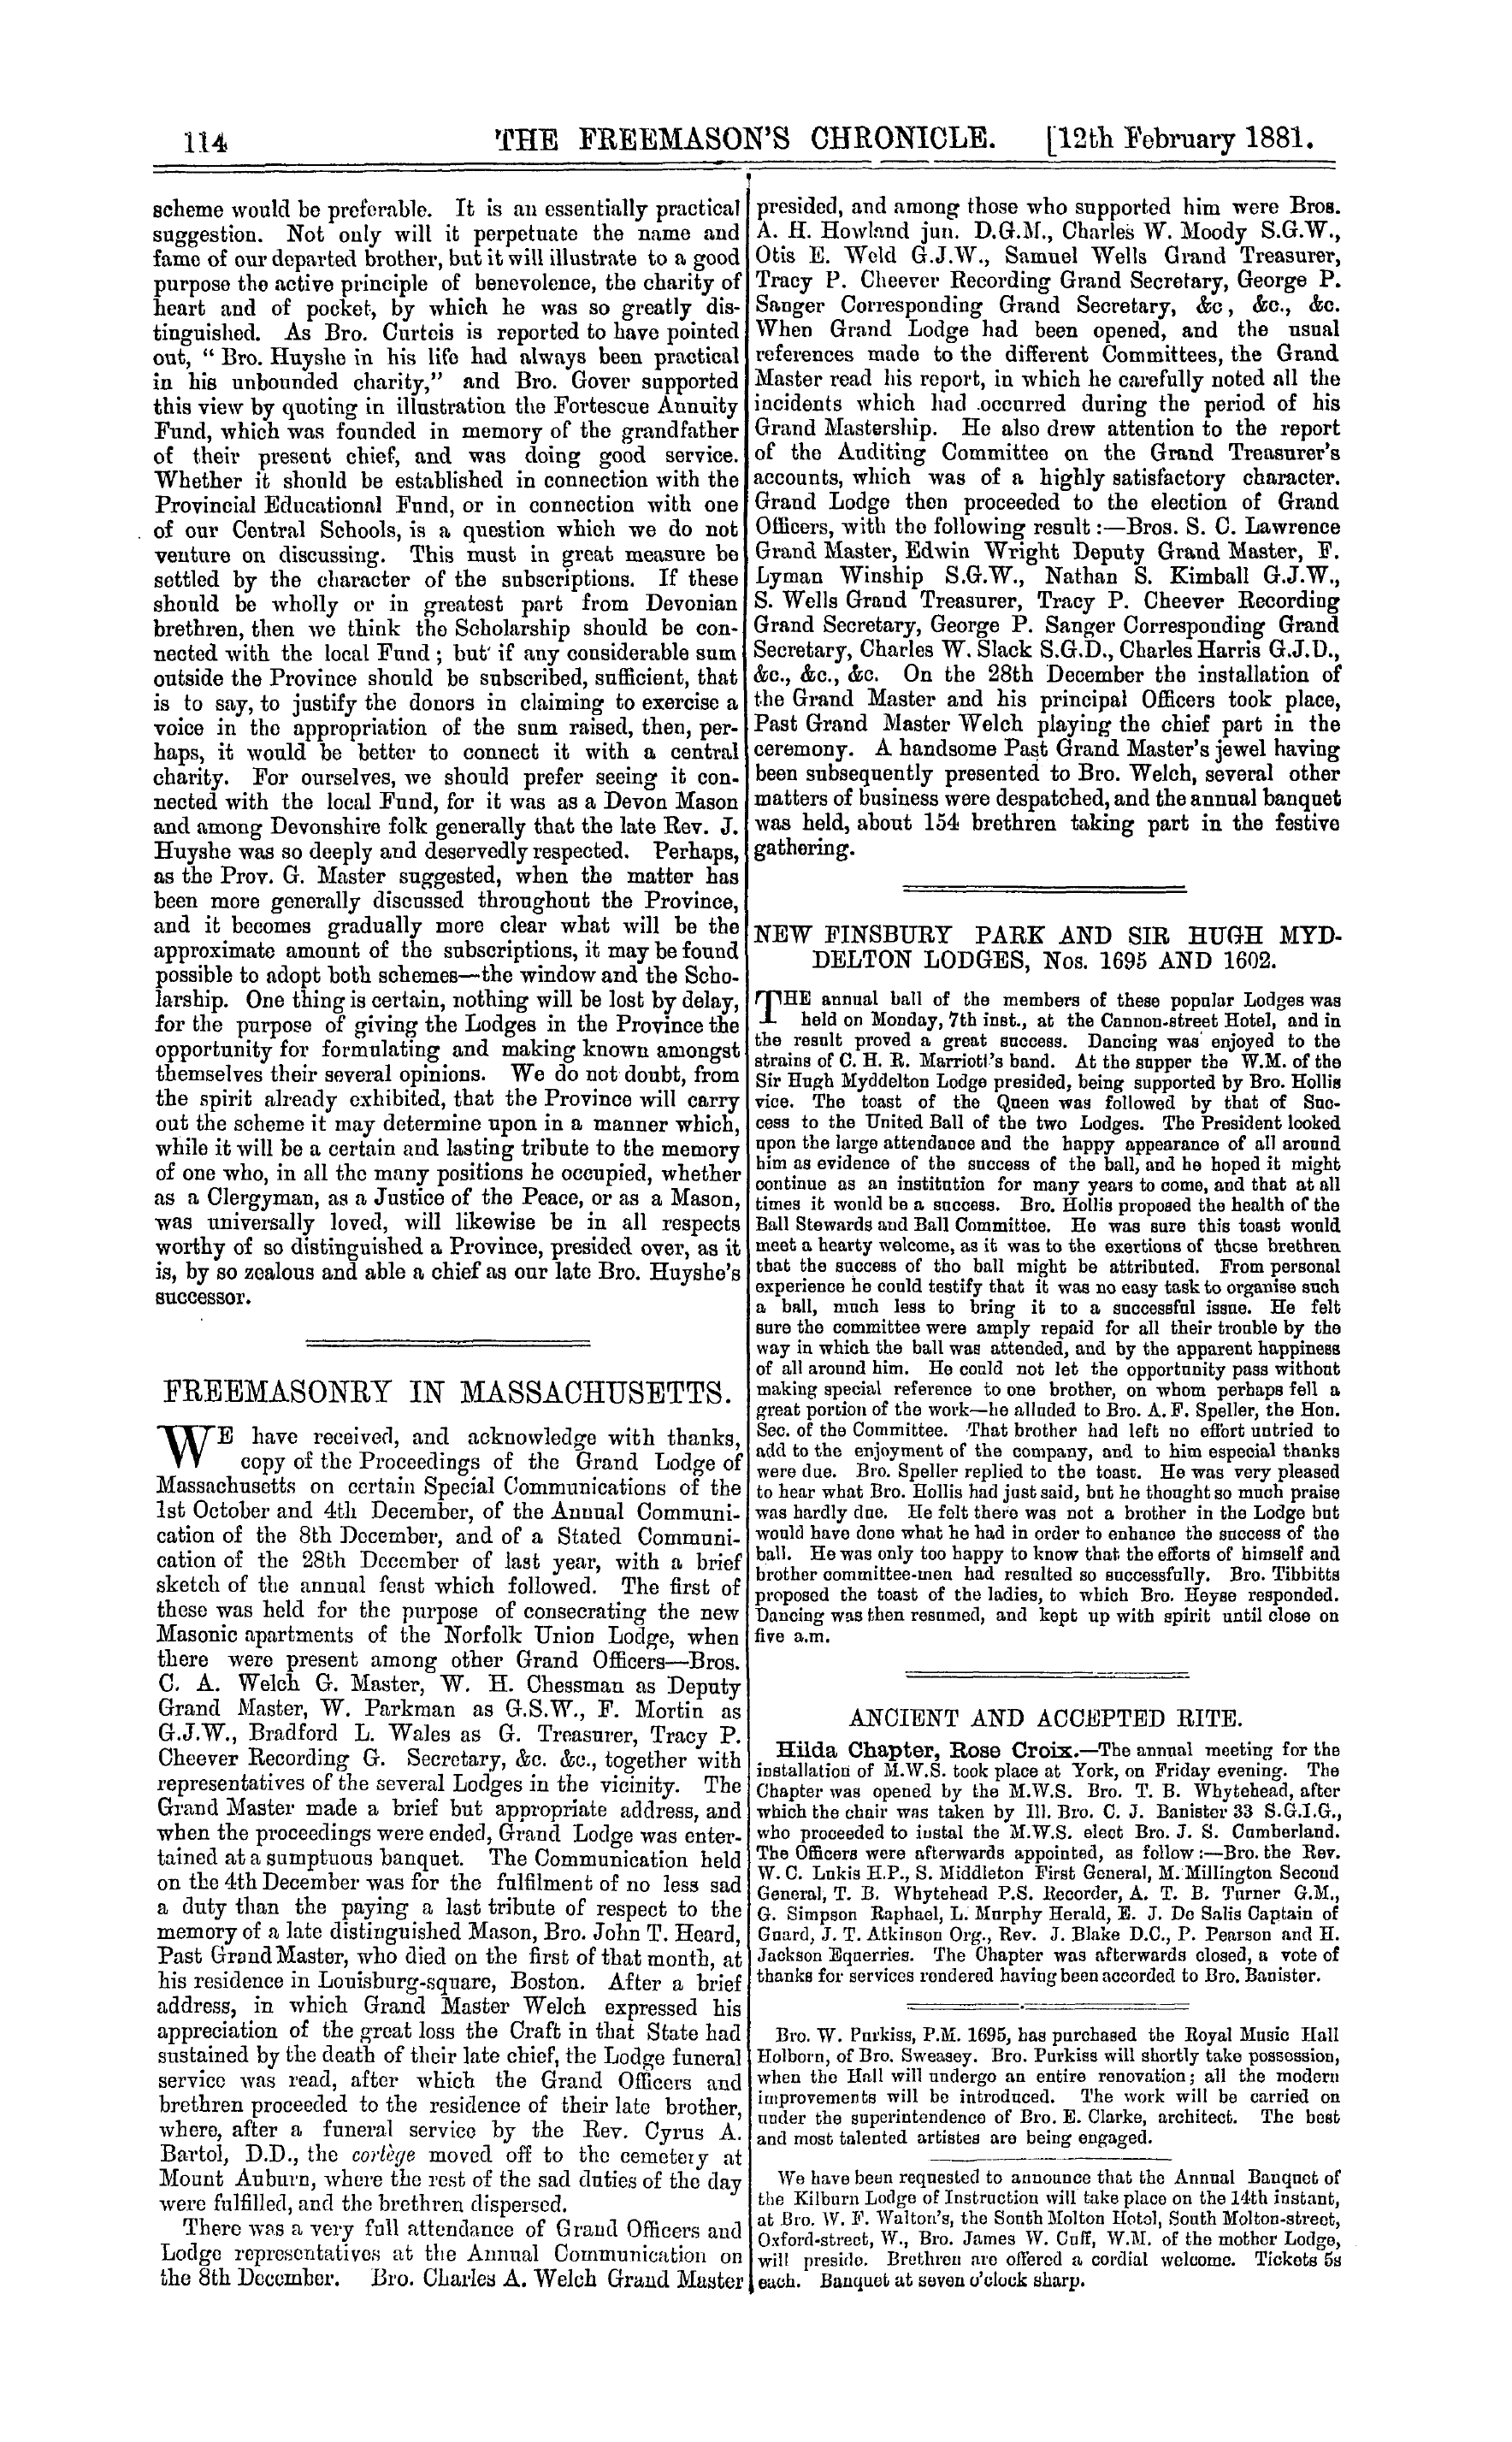 The Freemason's Chronicle: 1881-02-12: 2